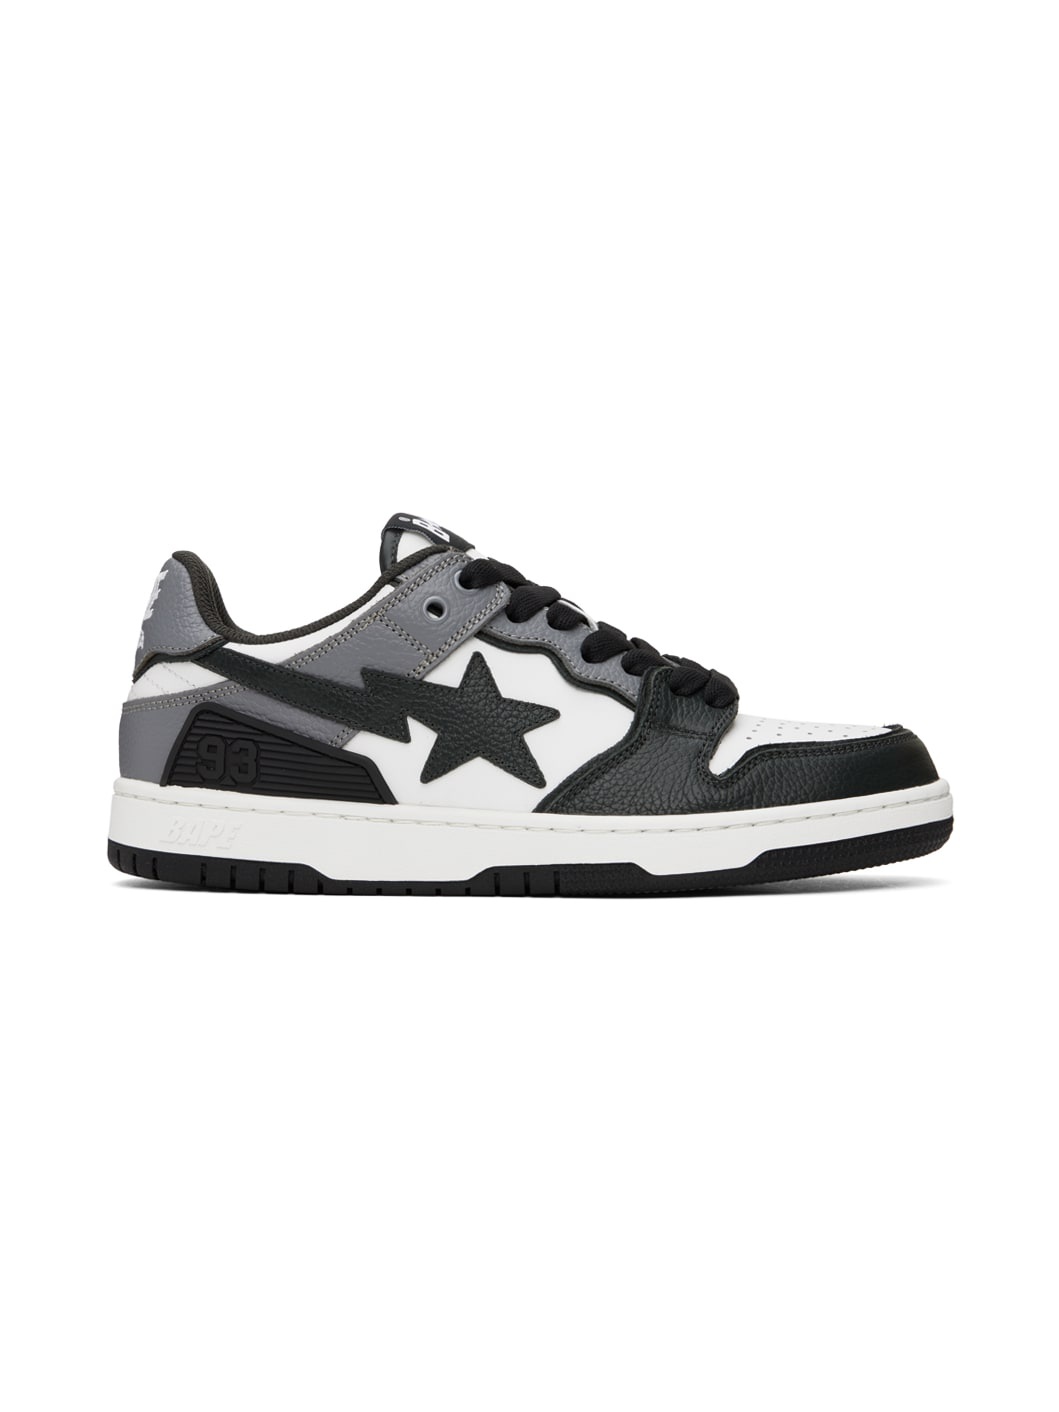 White & Black SK8 STA #5 M1 Sneakers - 1